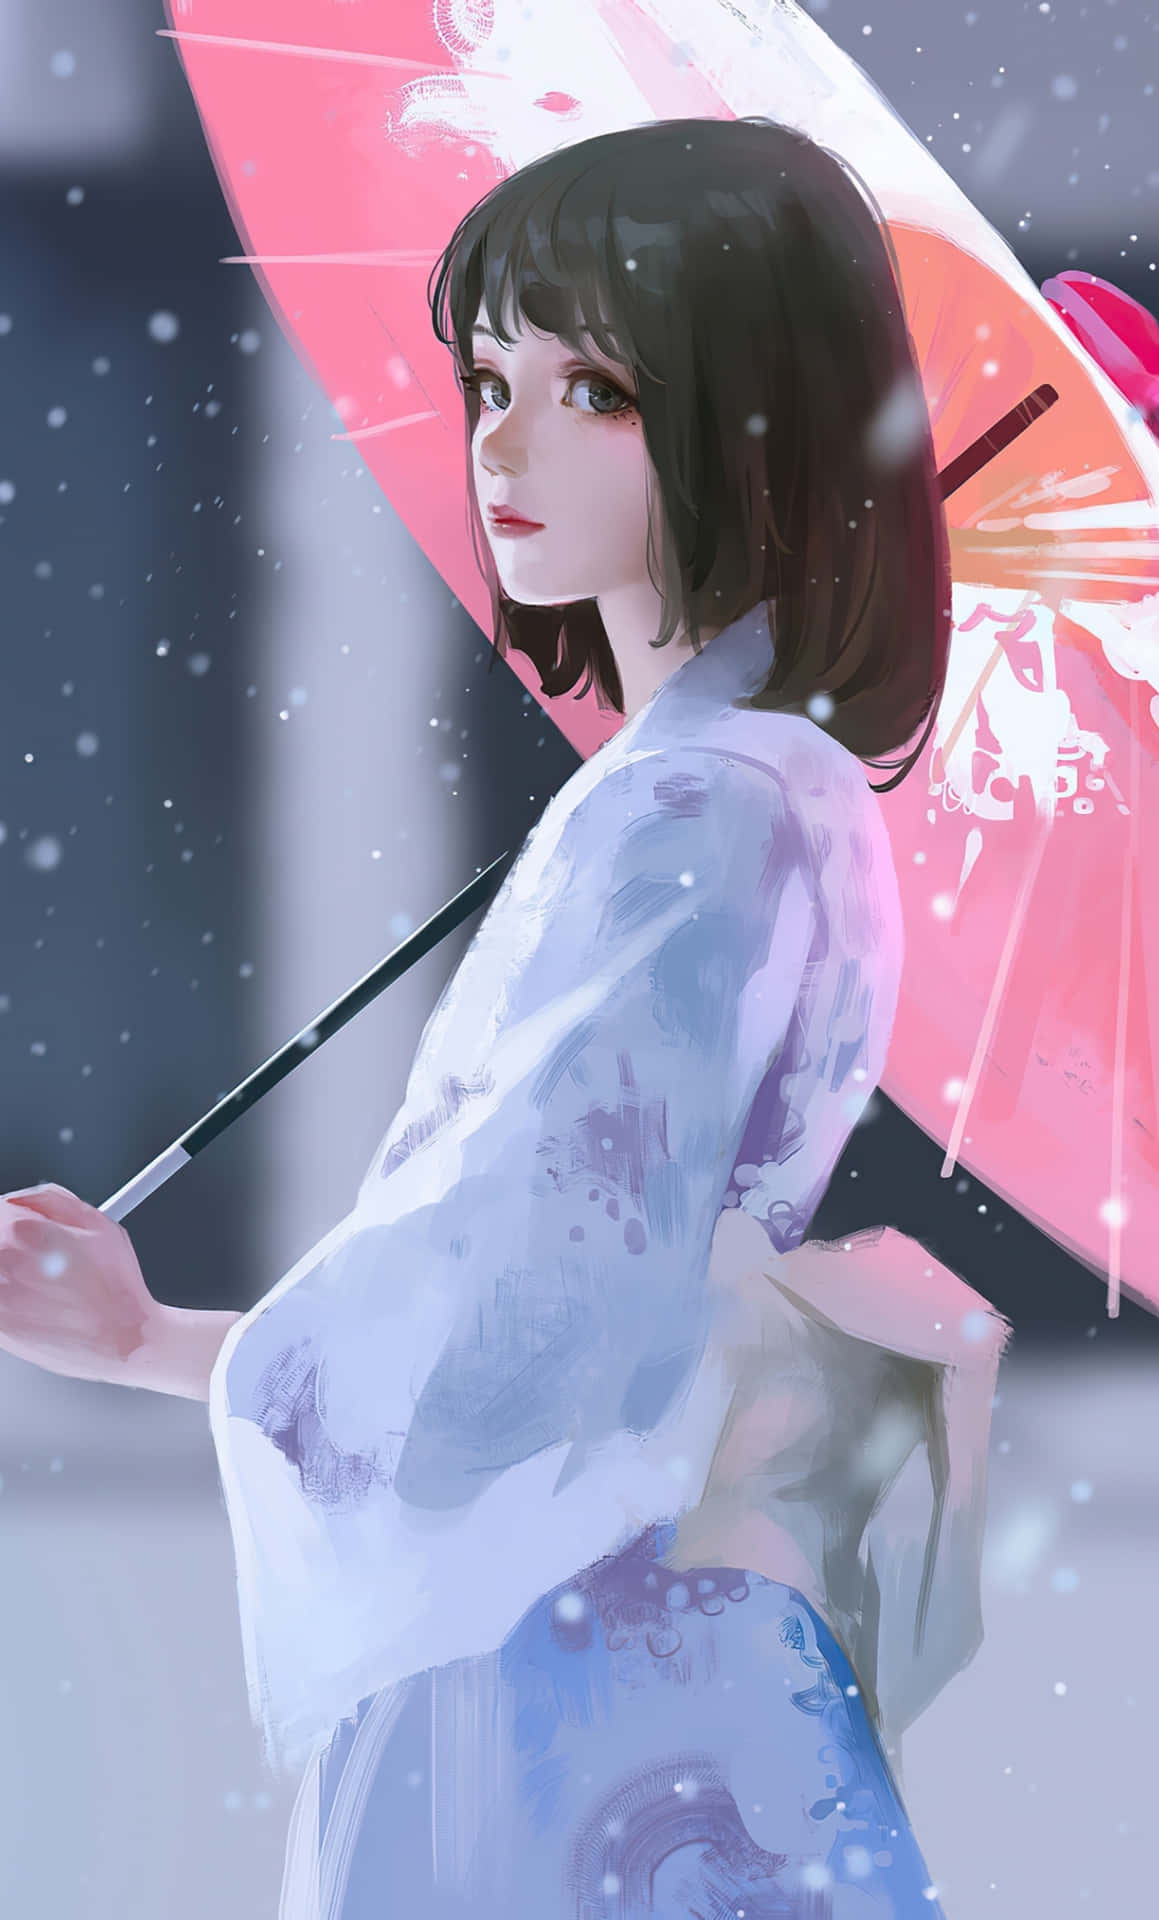 Anime Teen Girl In Kimono Picture